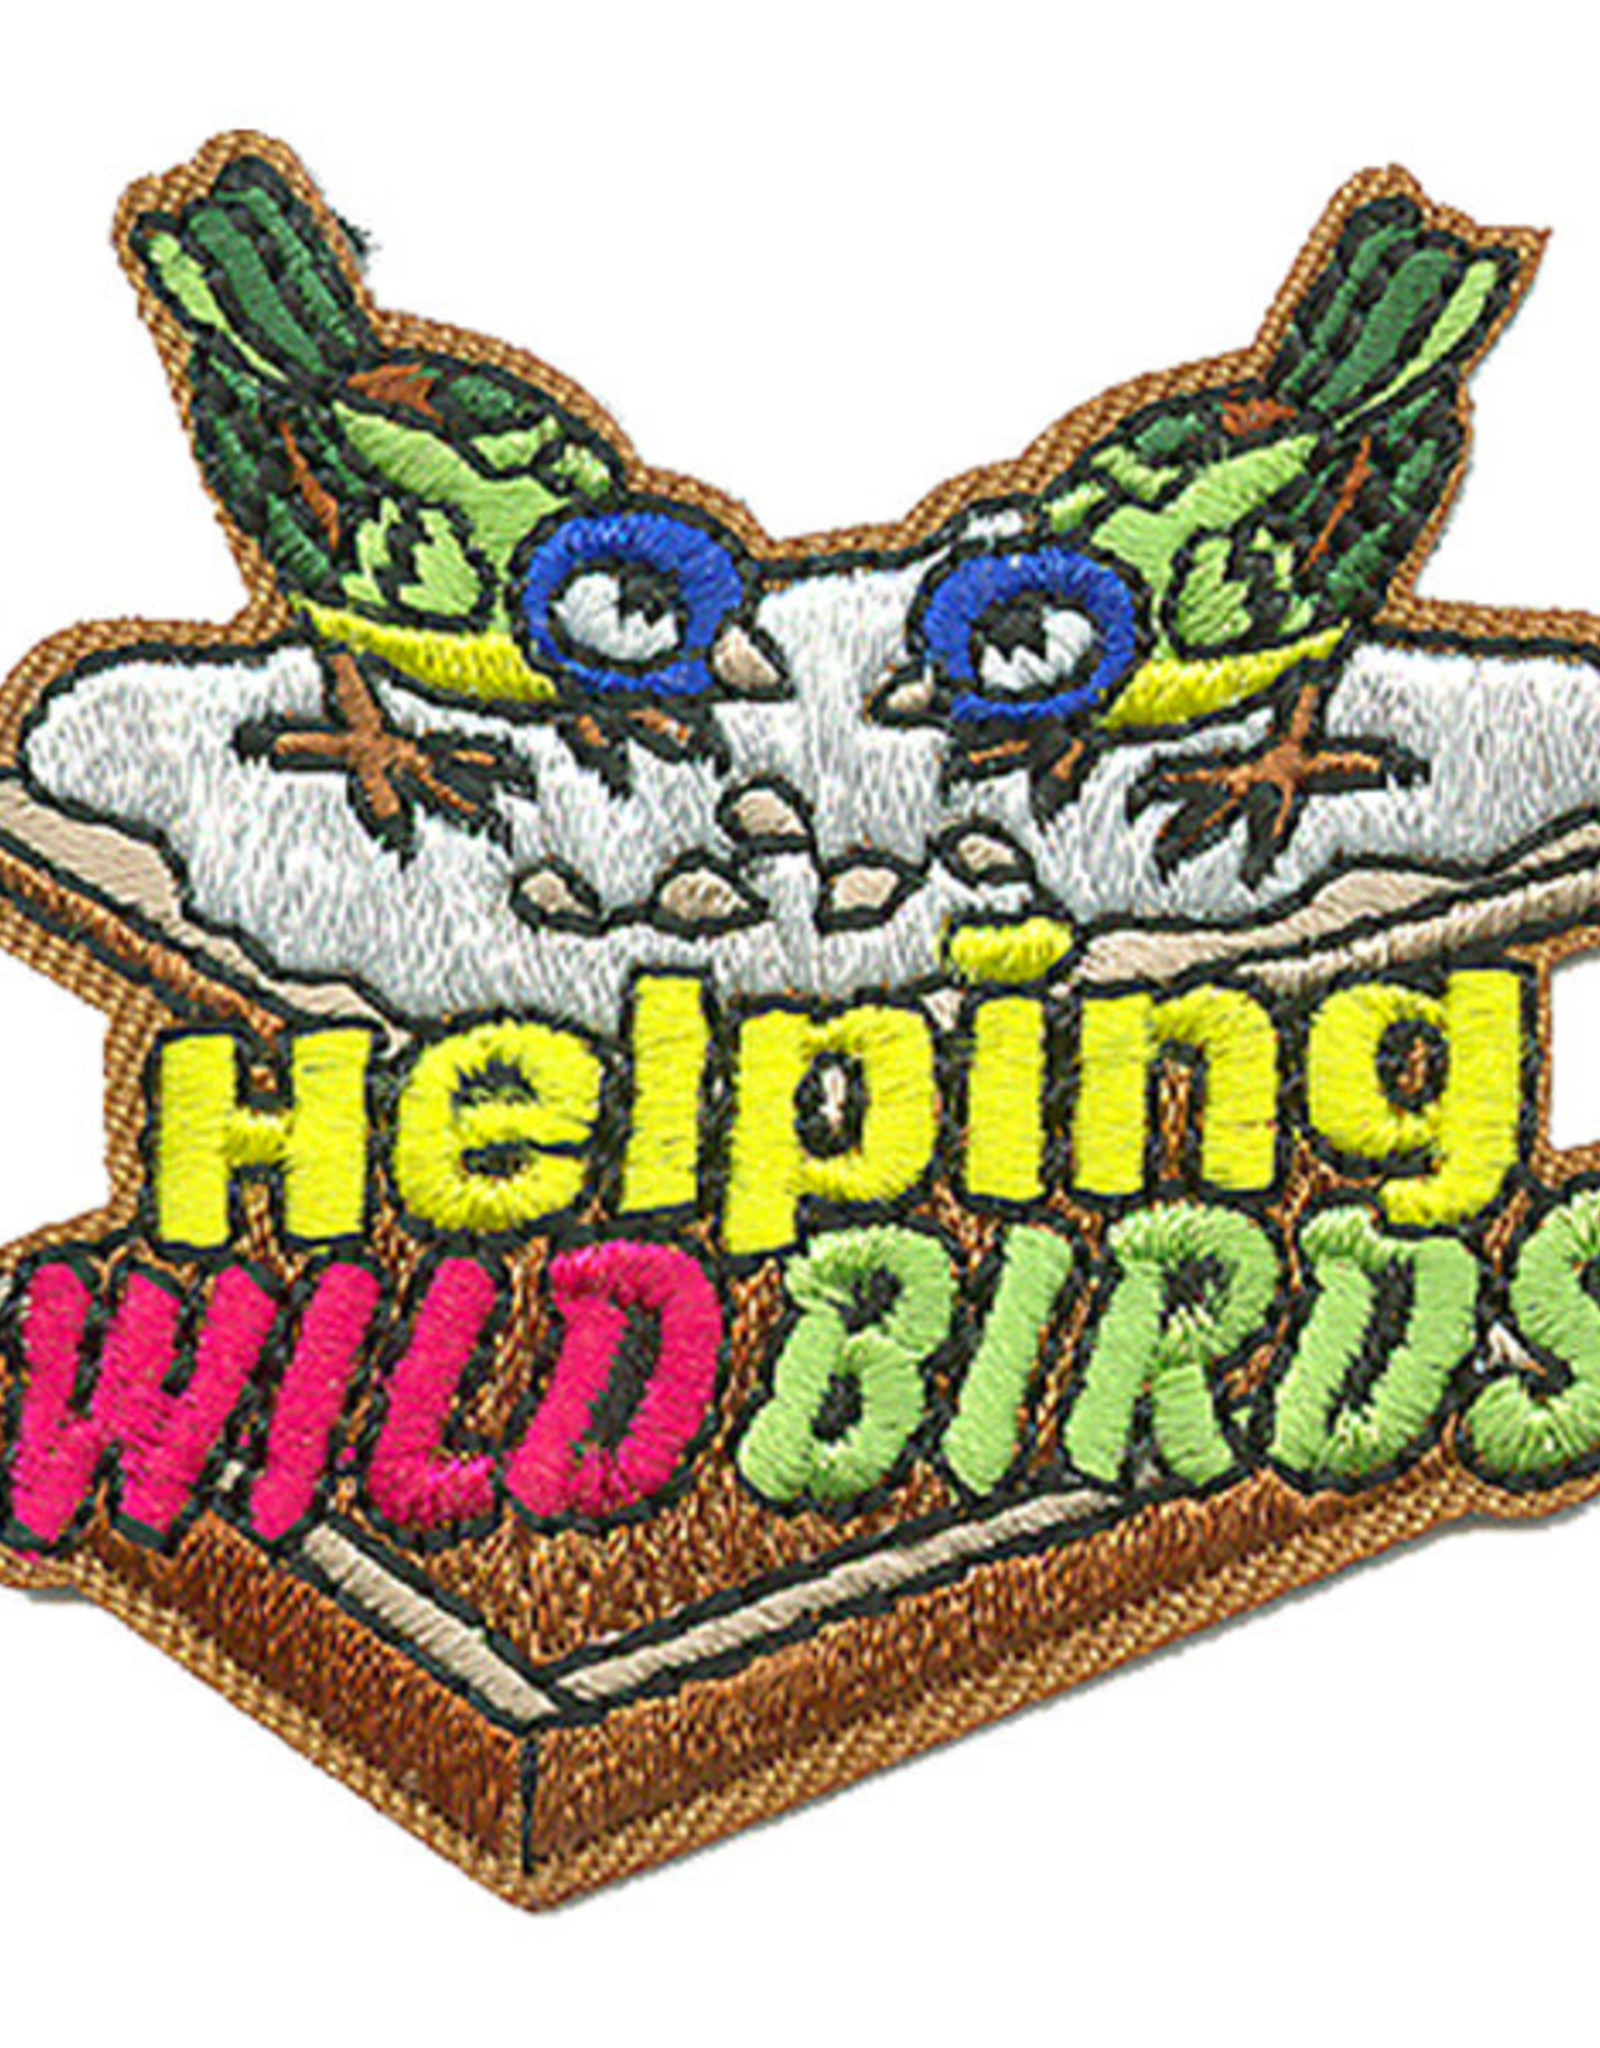 *Helping Wild Birds Fun Patch